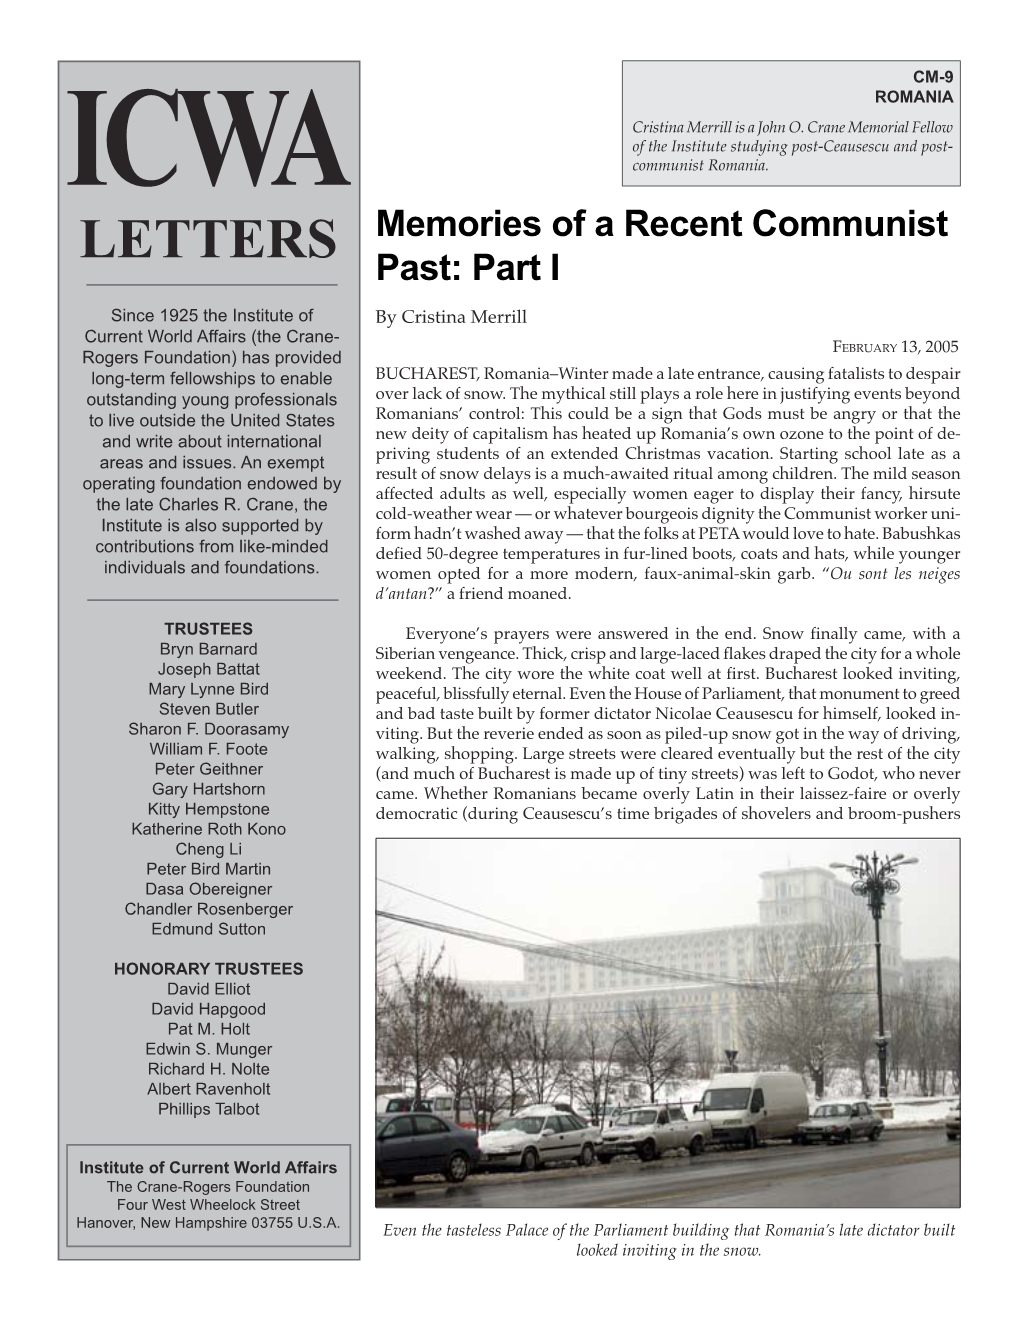 Memories of a Recent Communist Past